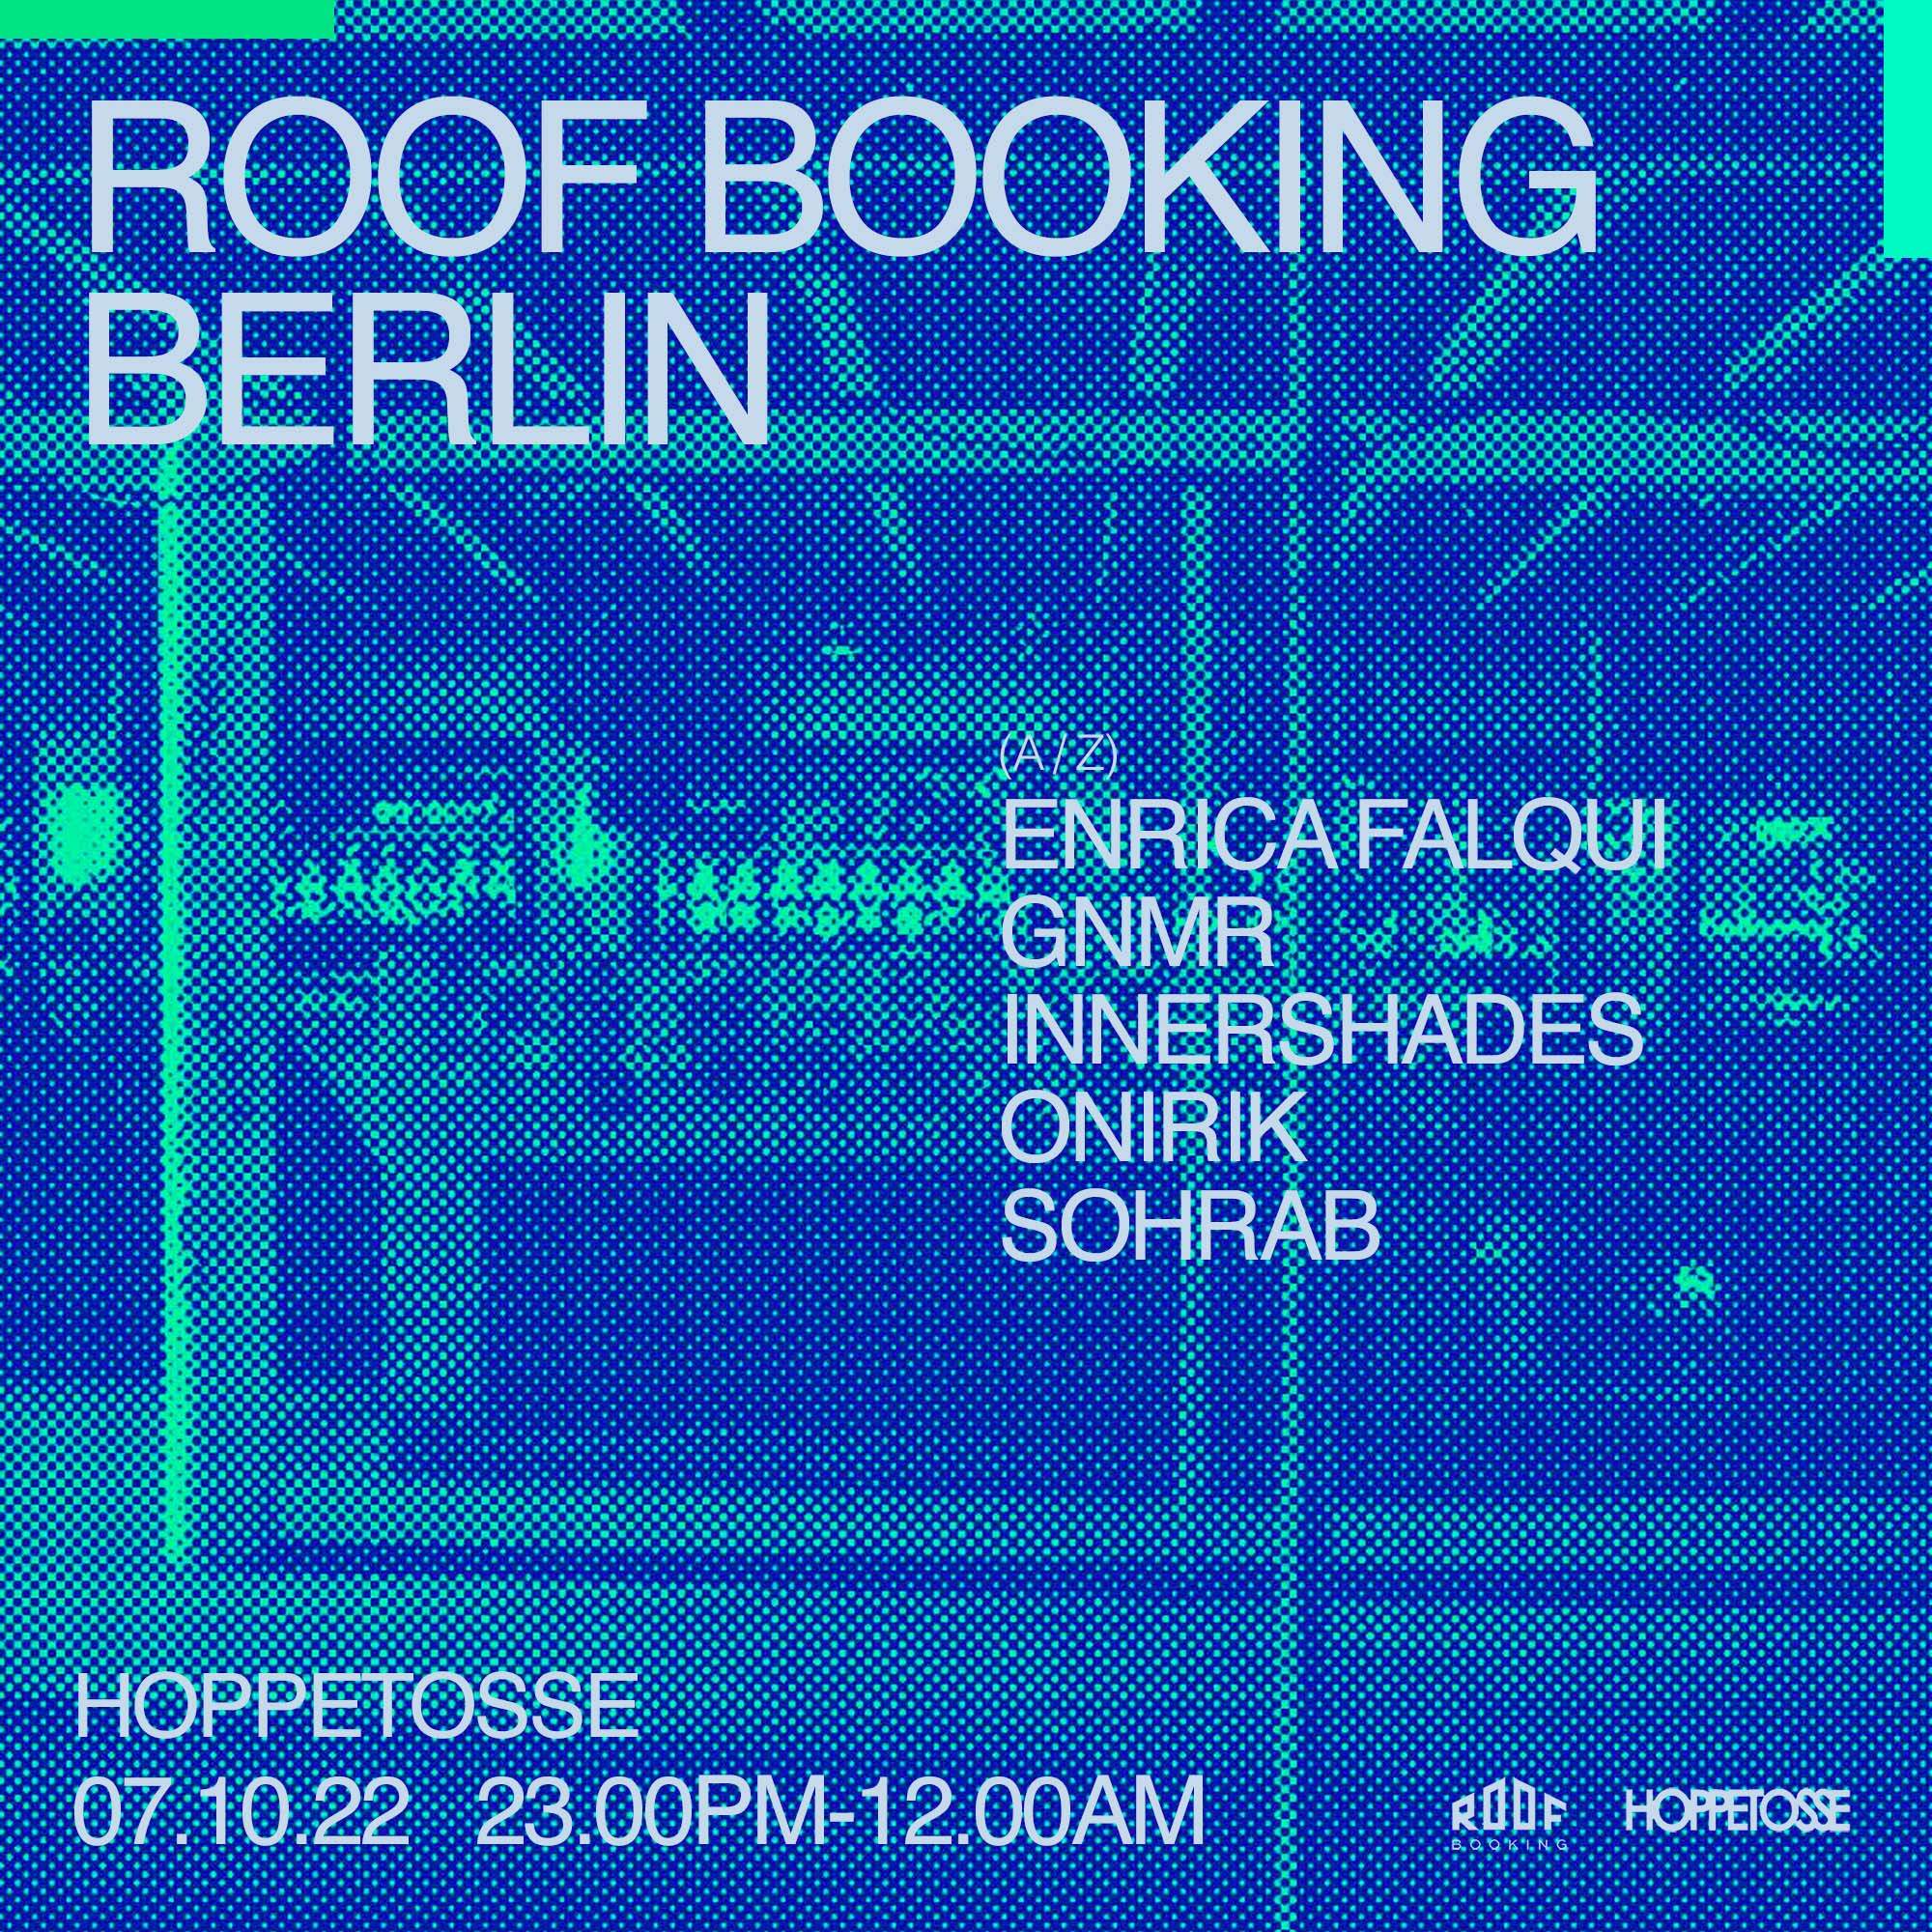 Roof Booking Berlin - フライヤー表